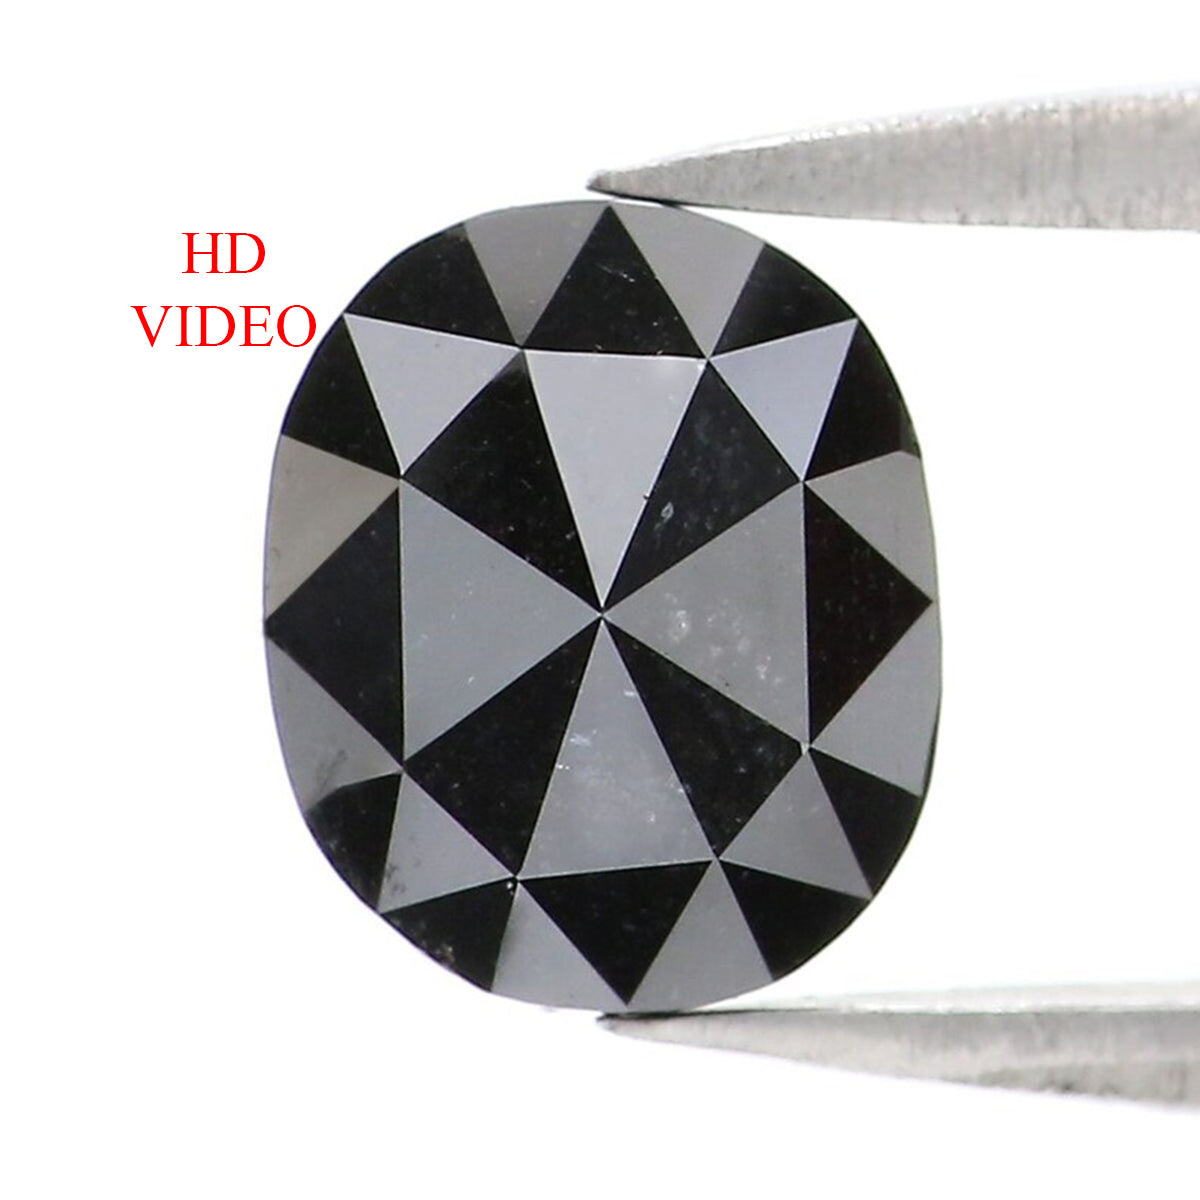 1.31 CT Natural Loose Oval Shape Diamond Black Oval Rose Cut Diamond 7.10 MM Natural Loose Black Color Oval Shape Rose Cut Diamond LQ7596